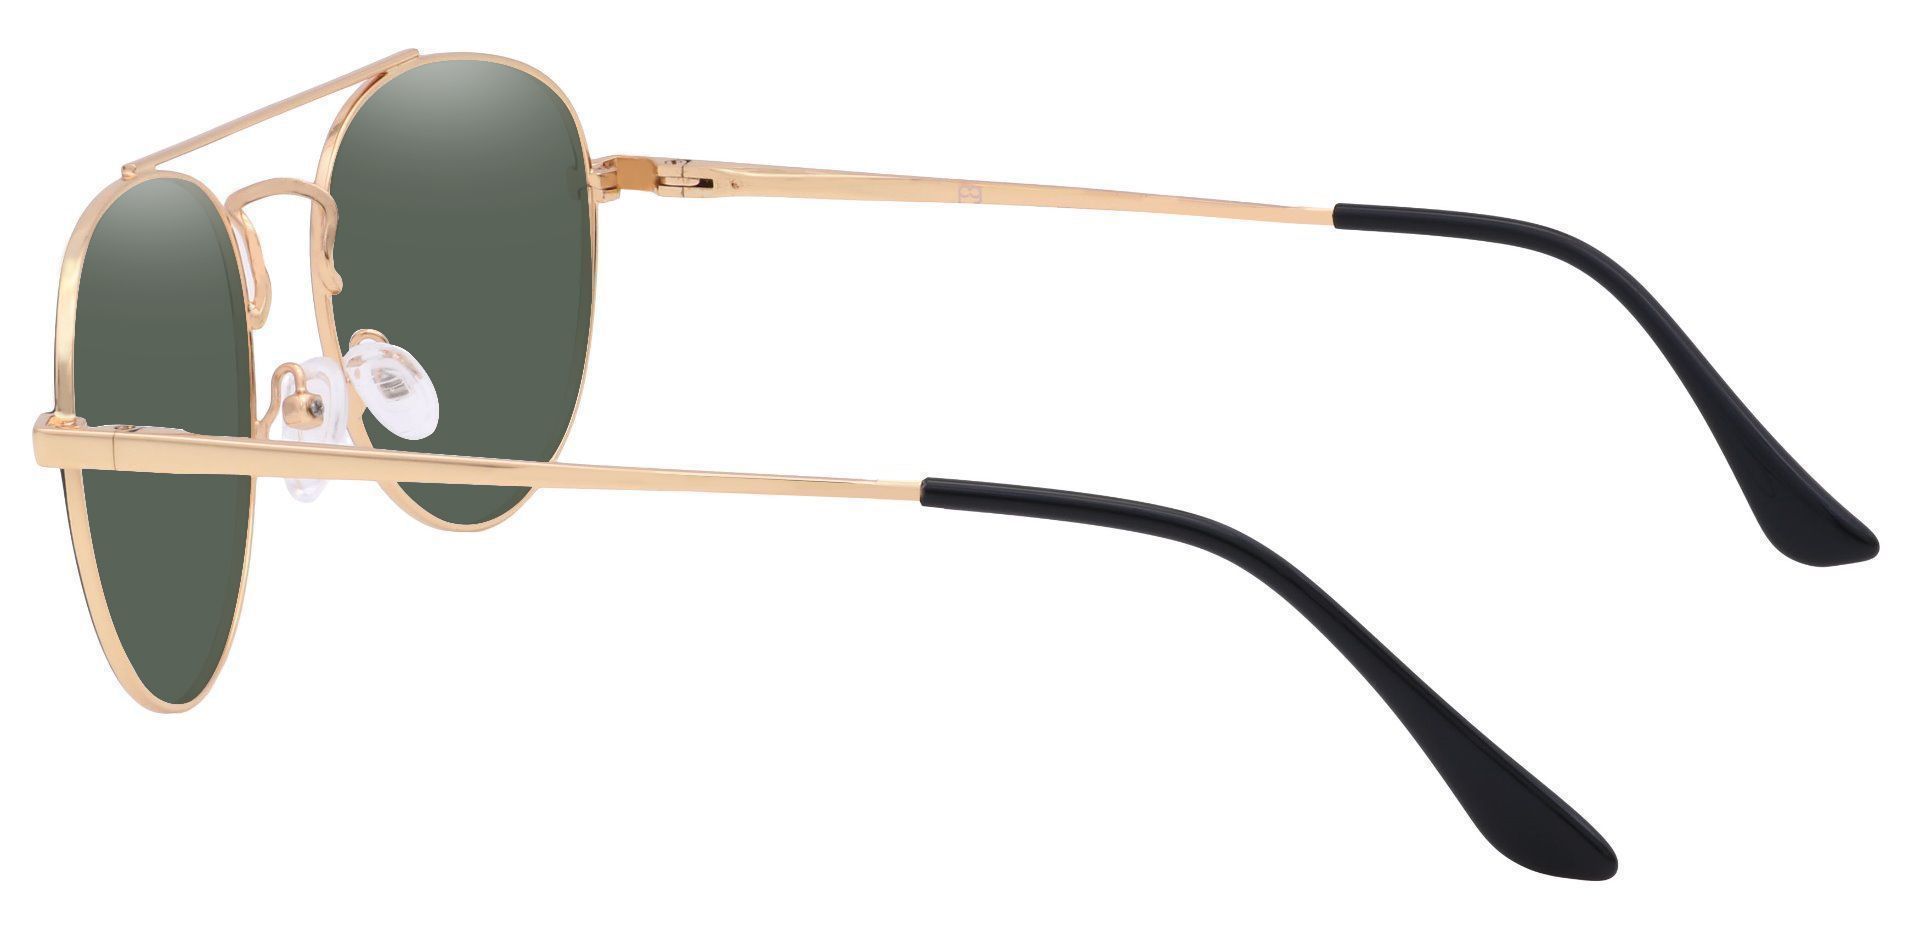 Trapp Aviator Prescription Sunglasses - Gold Frame With Green Lenses